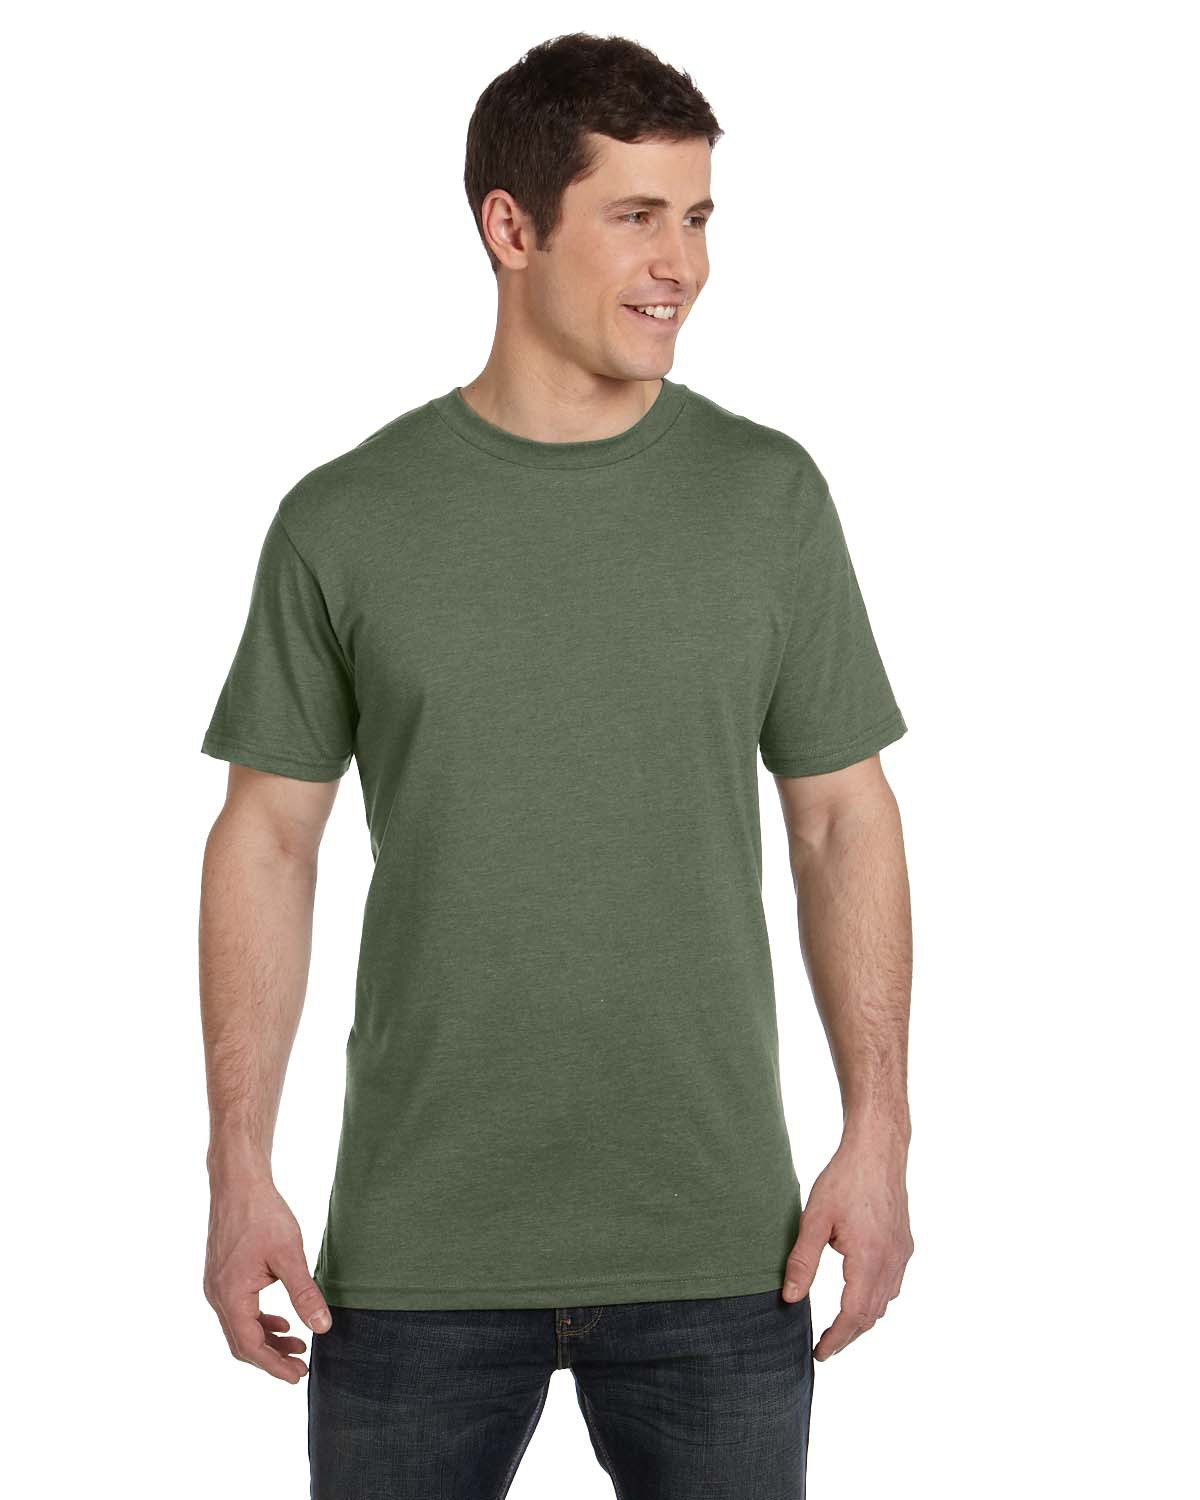 econscious Men's Blended Eco T-Shirt ASPARAGUS 